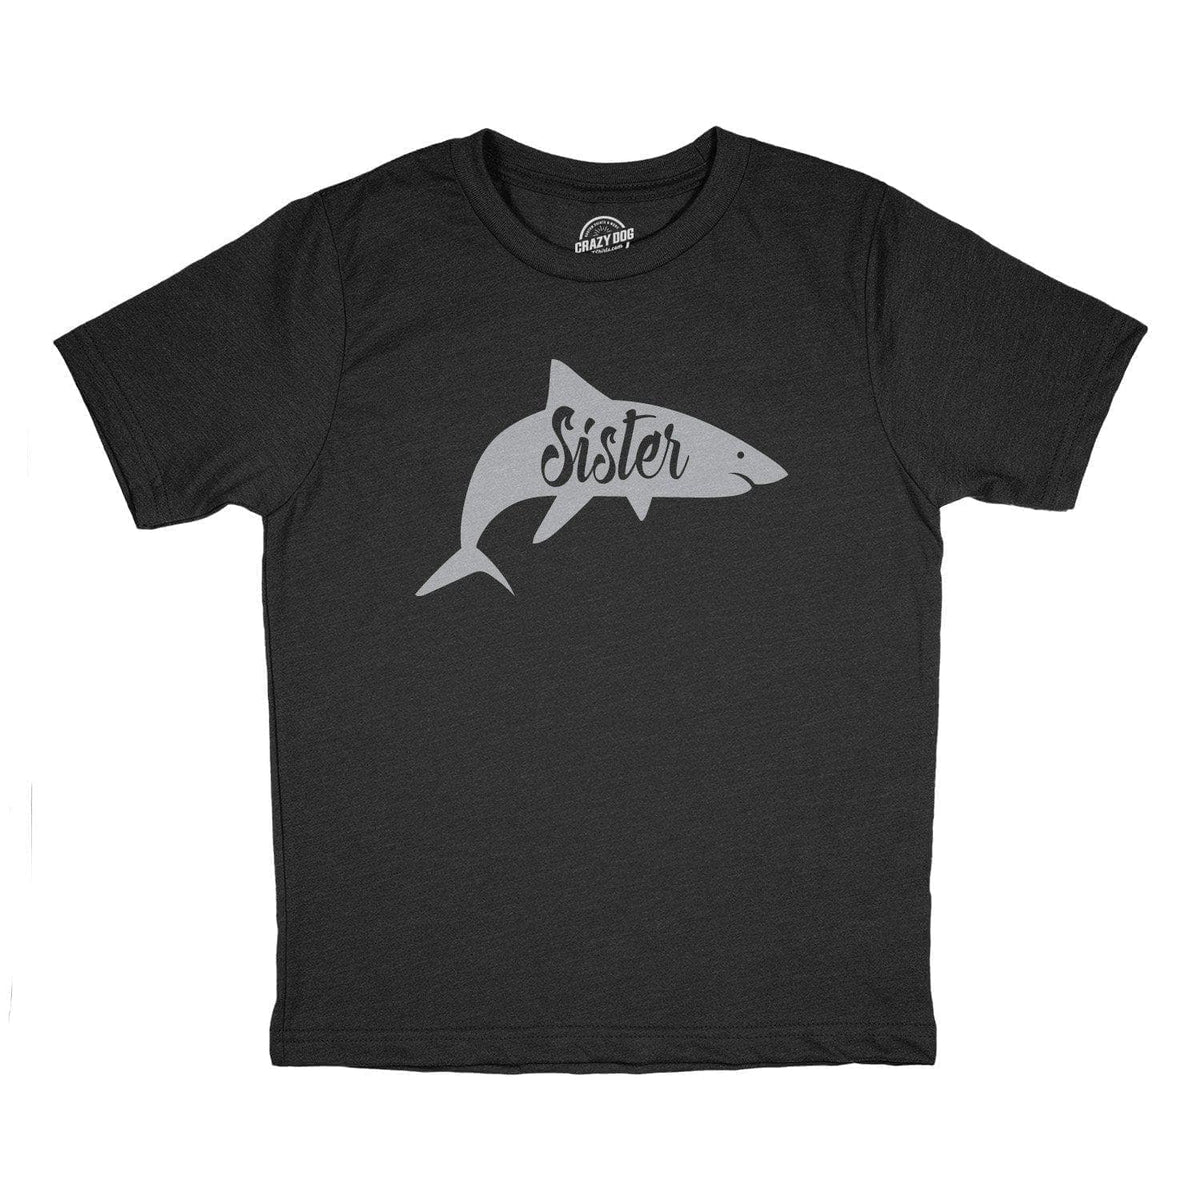 Sister Shark Youth Tshirt  -  Crazy Dog T-Shirts